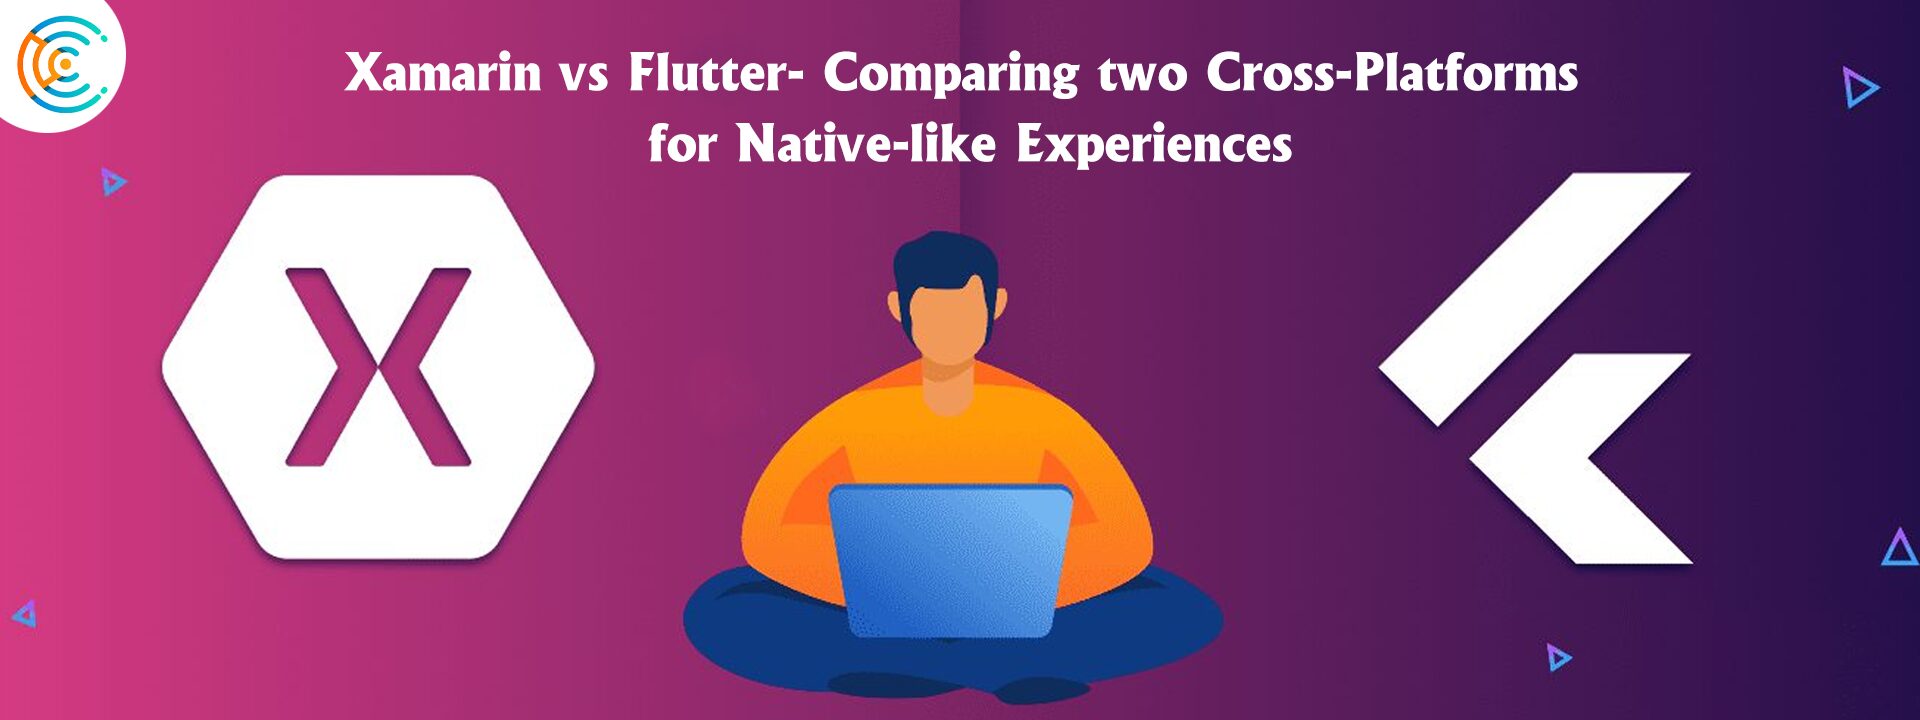 Xamarin vs Flutter- Comparing two Cross-Platforms